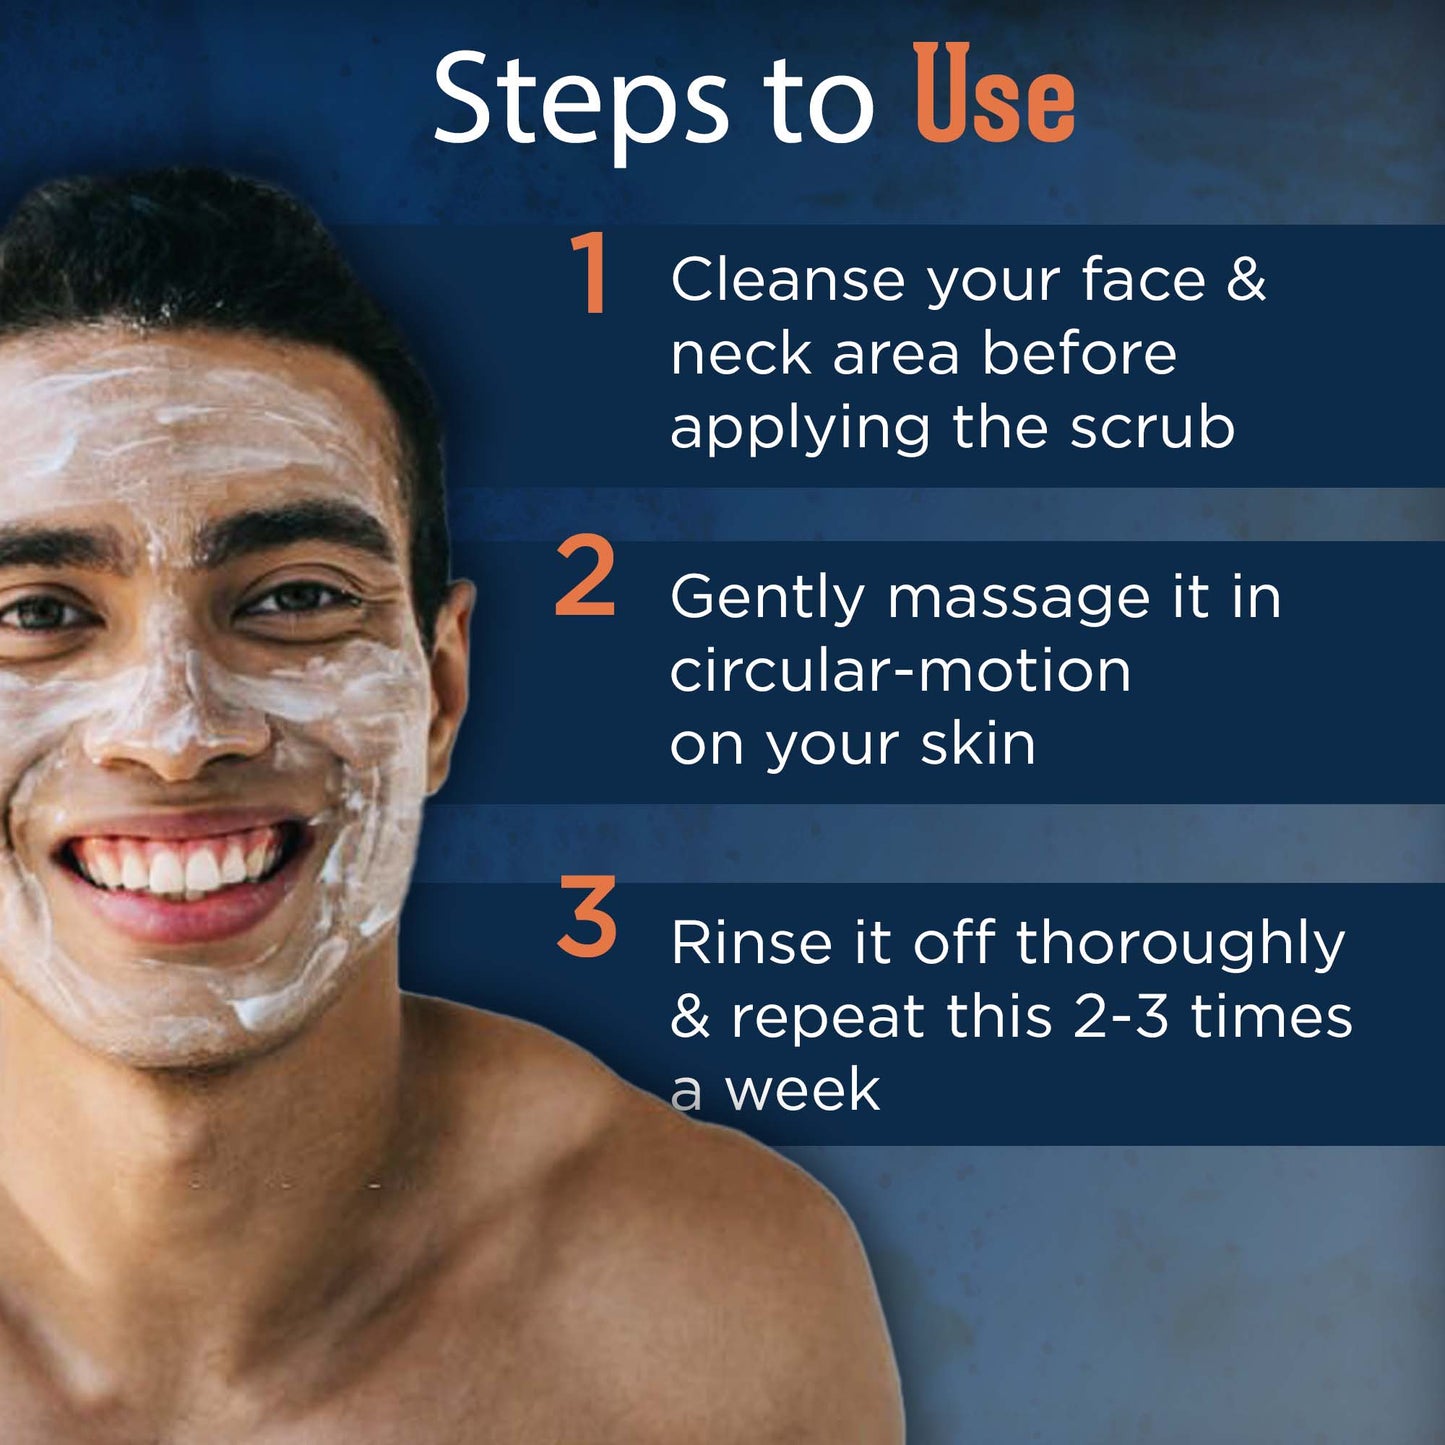 Tan Removal Face Scrub 100g